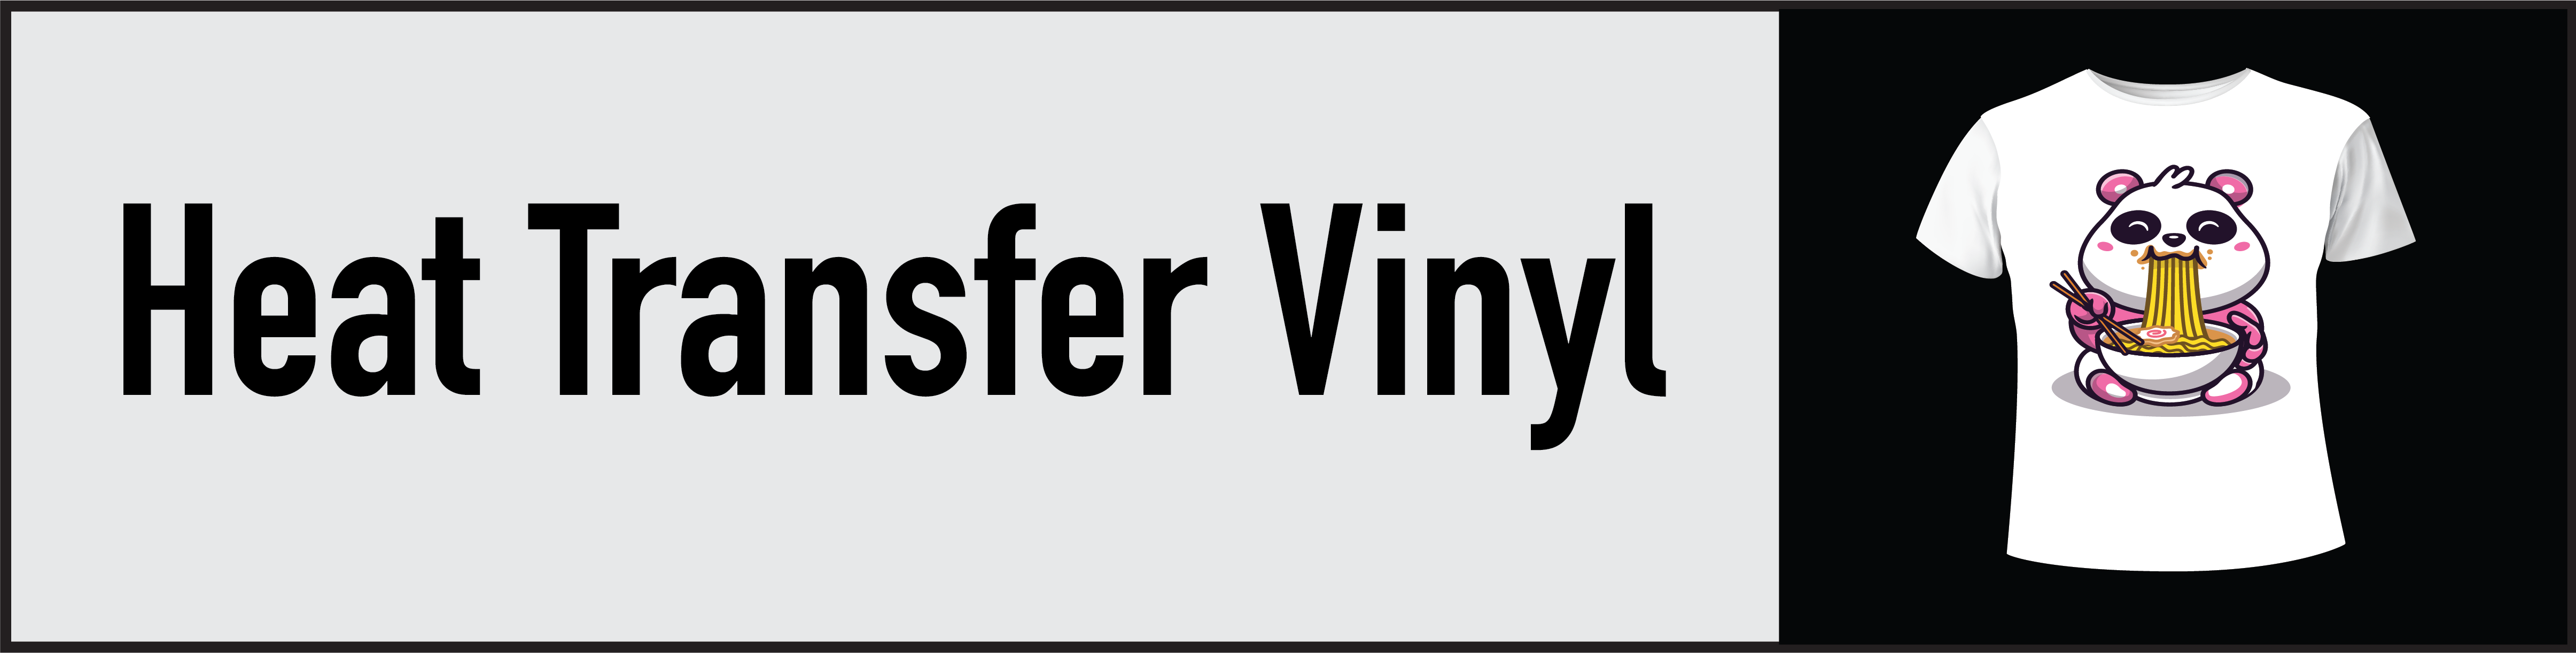 Heat Transfer Vinyl, Adhesive Vinyl, & Vinyl Tools